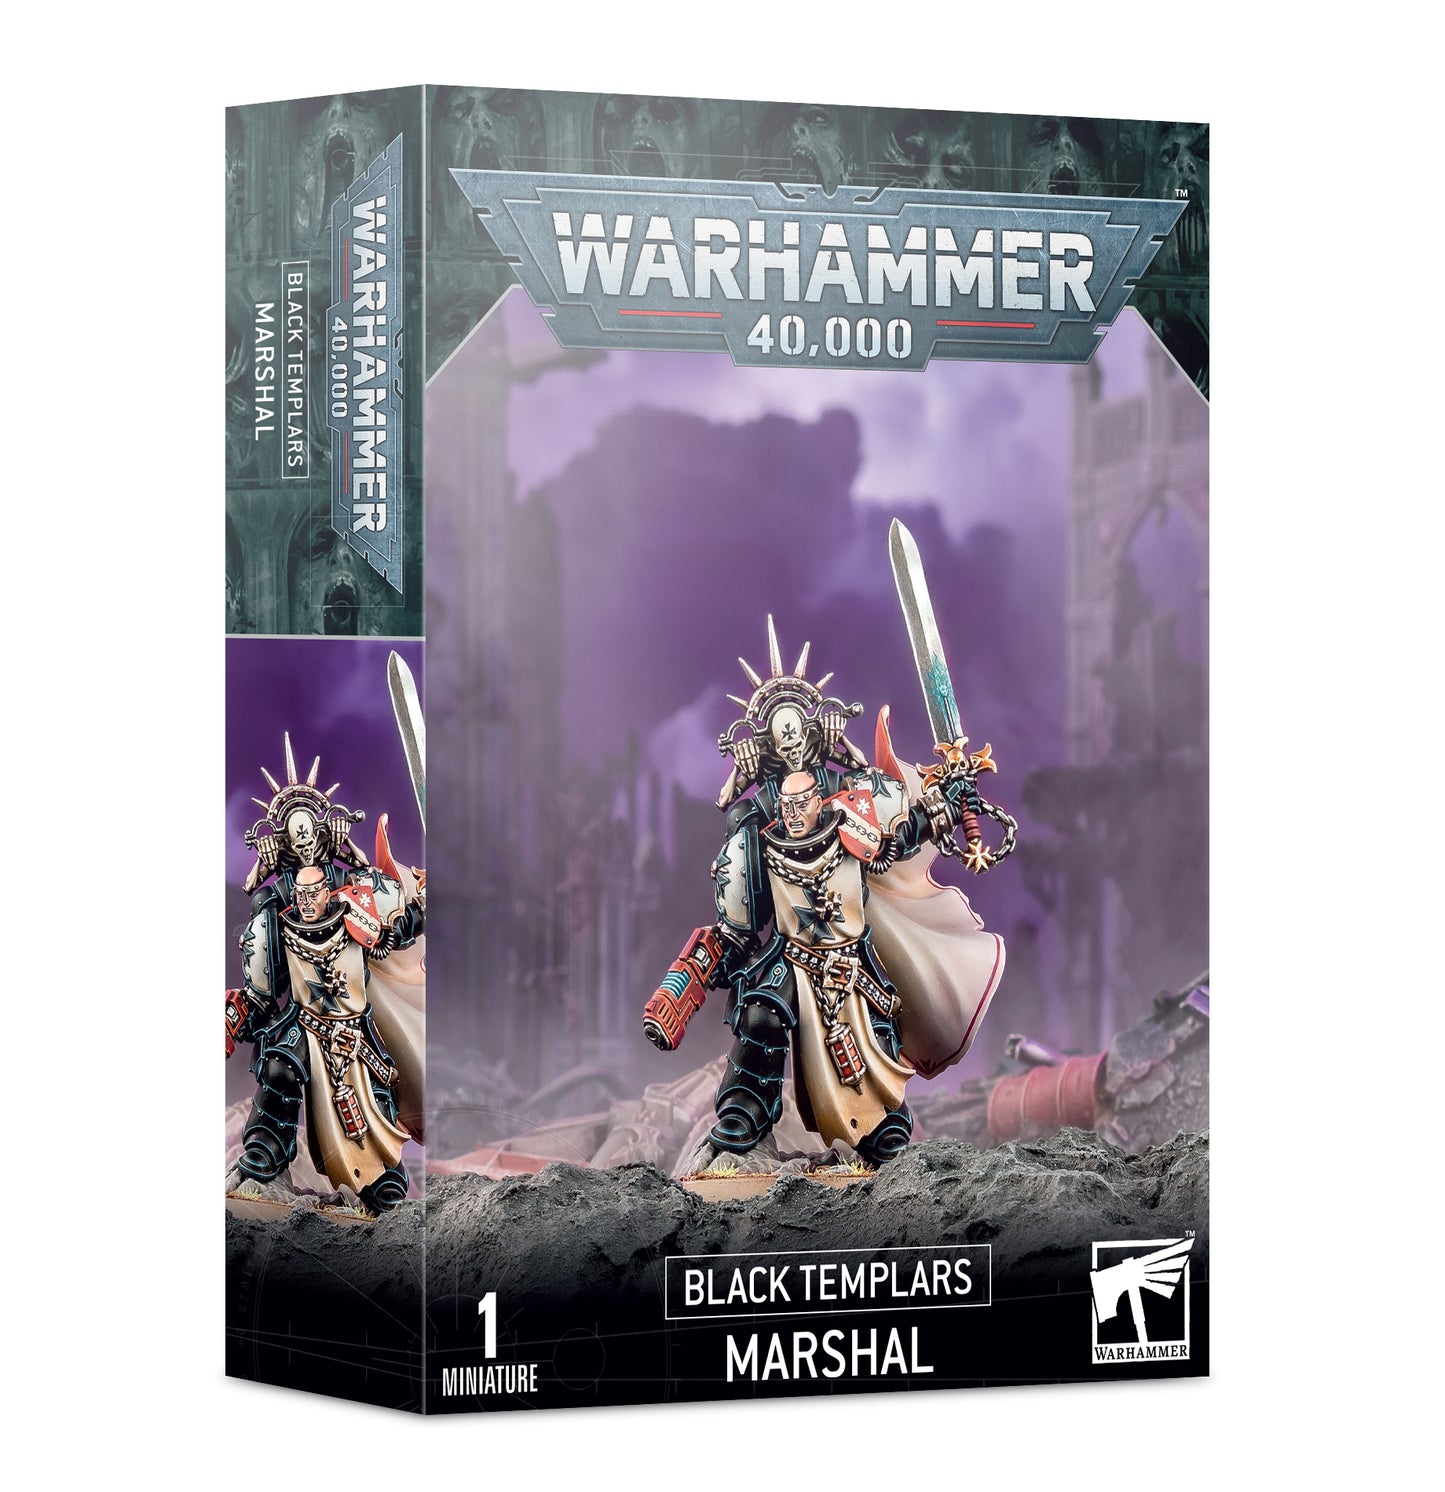 Black Templars Marshal, Warhammer 40,000